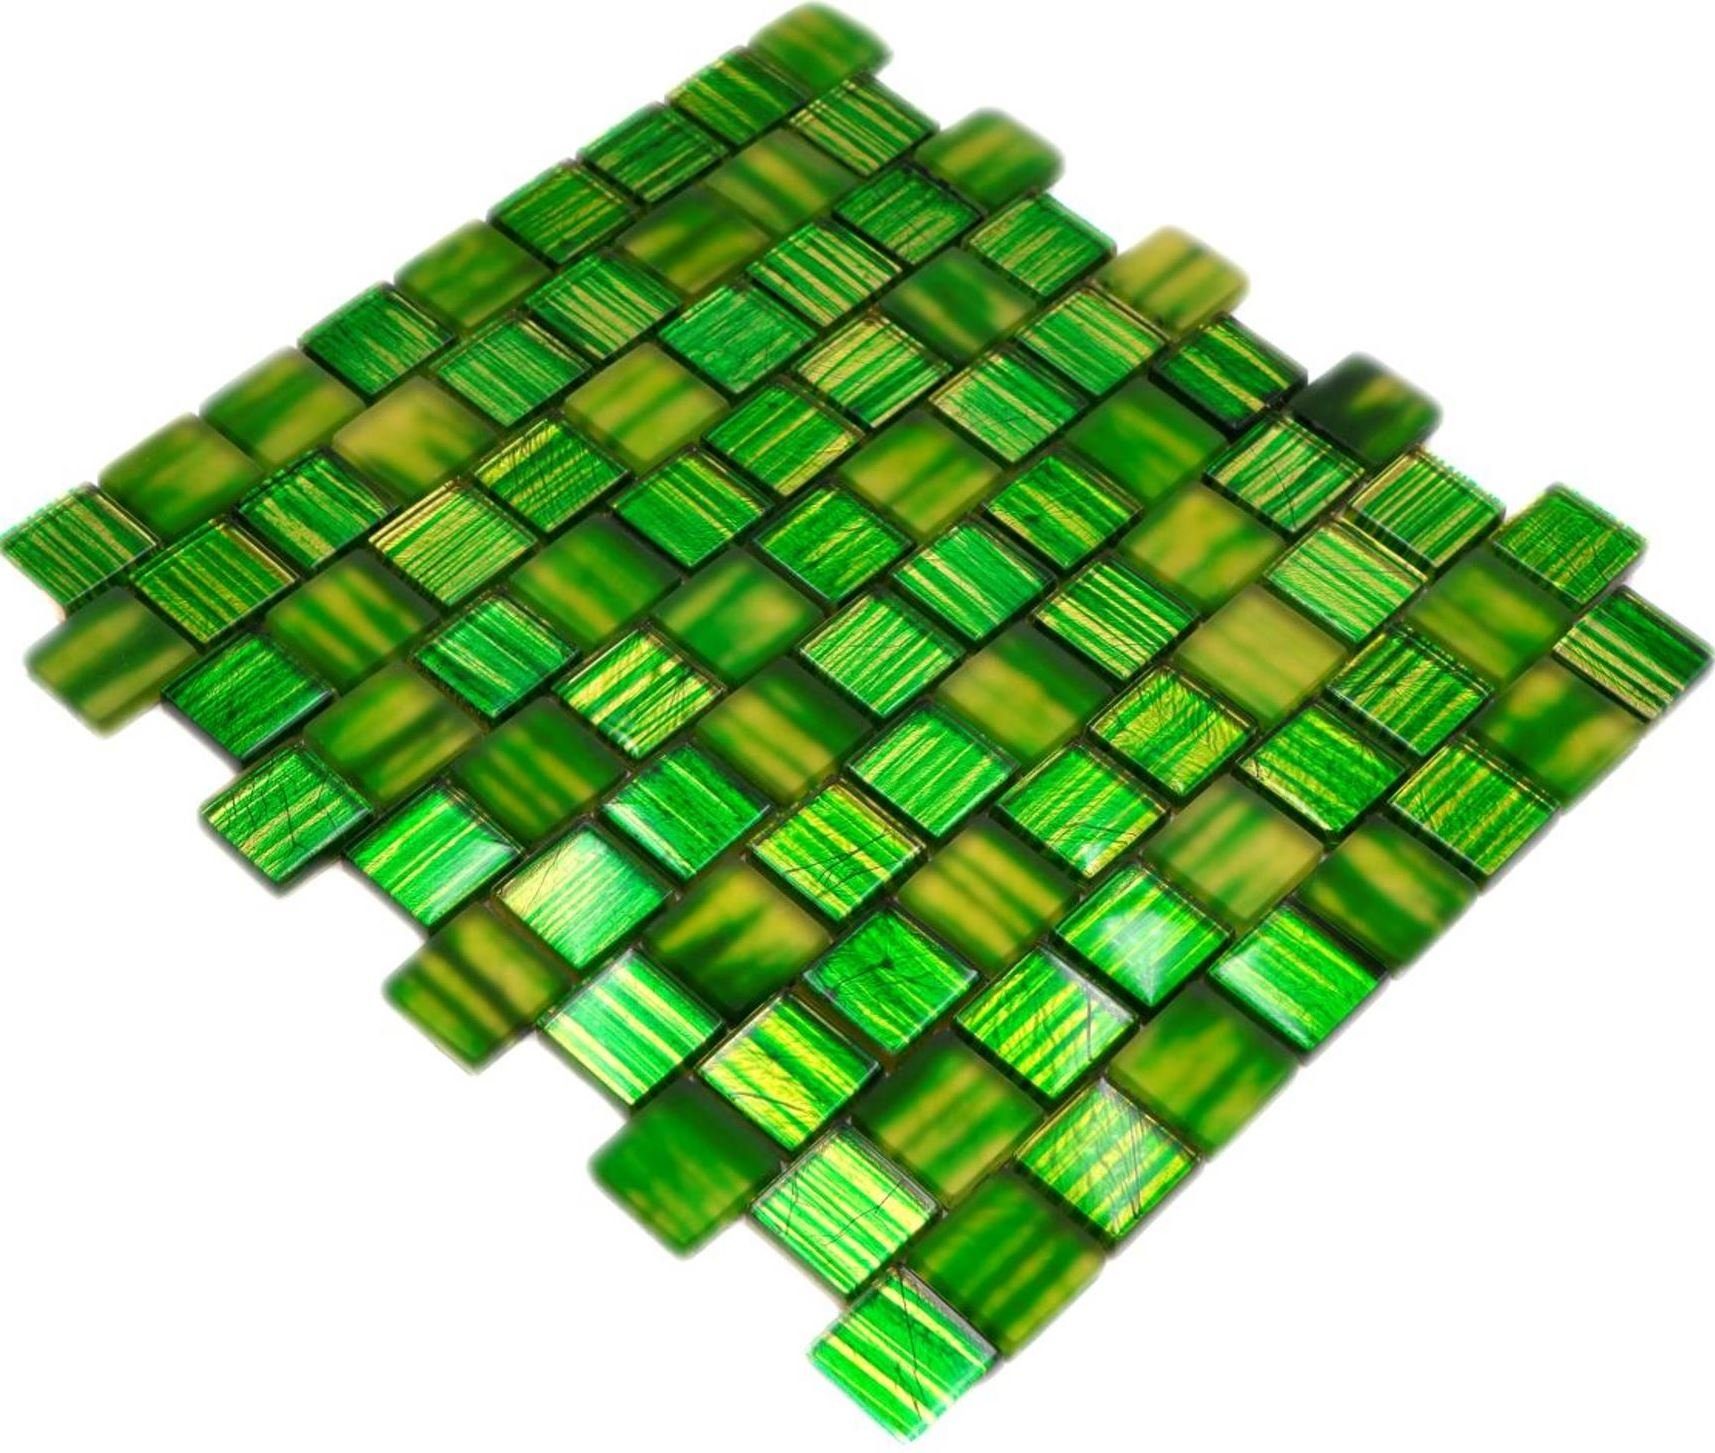 Mosani glänzend Matten Crystal grün Mosaikfliesen Glasmosaik 10 Mosaikfliesen /